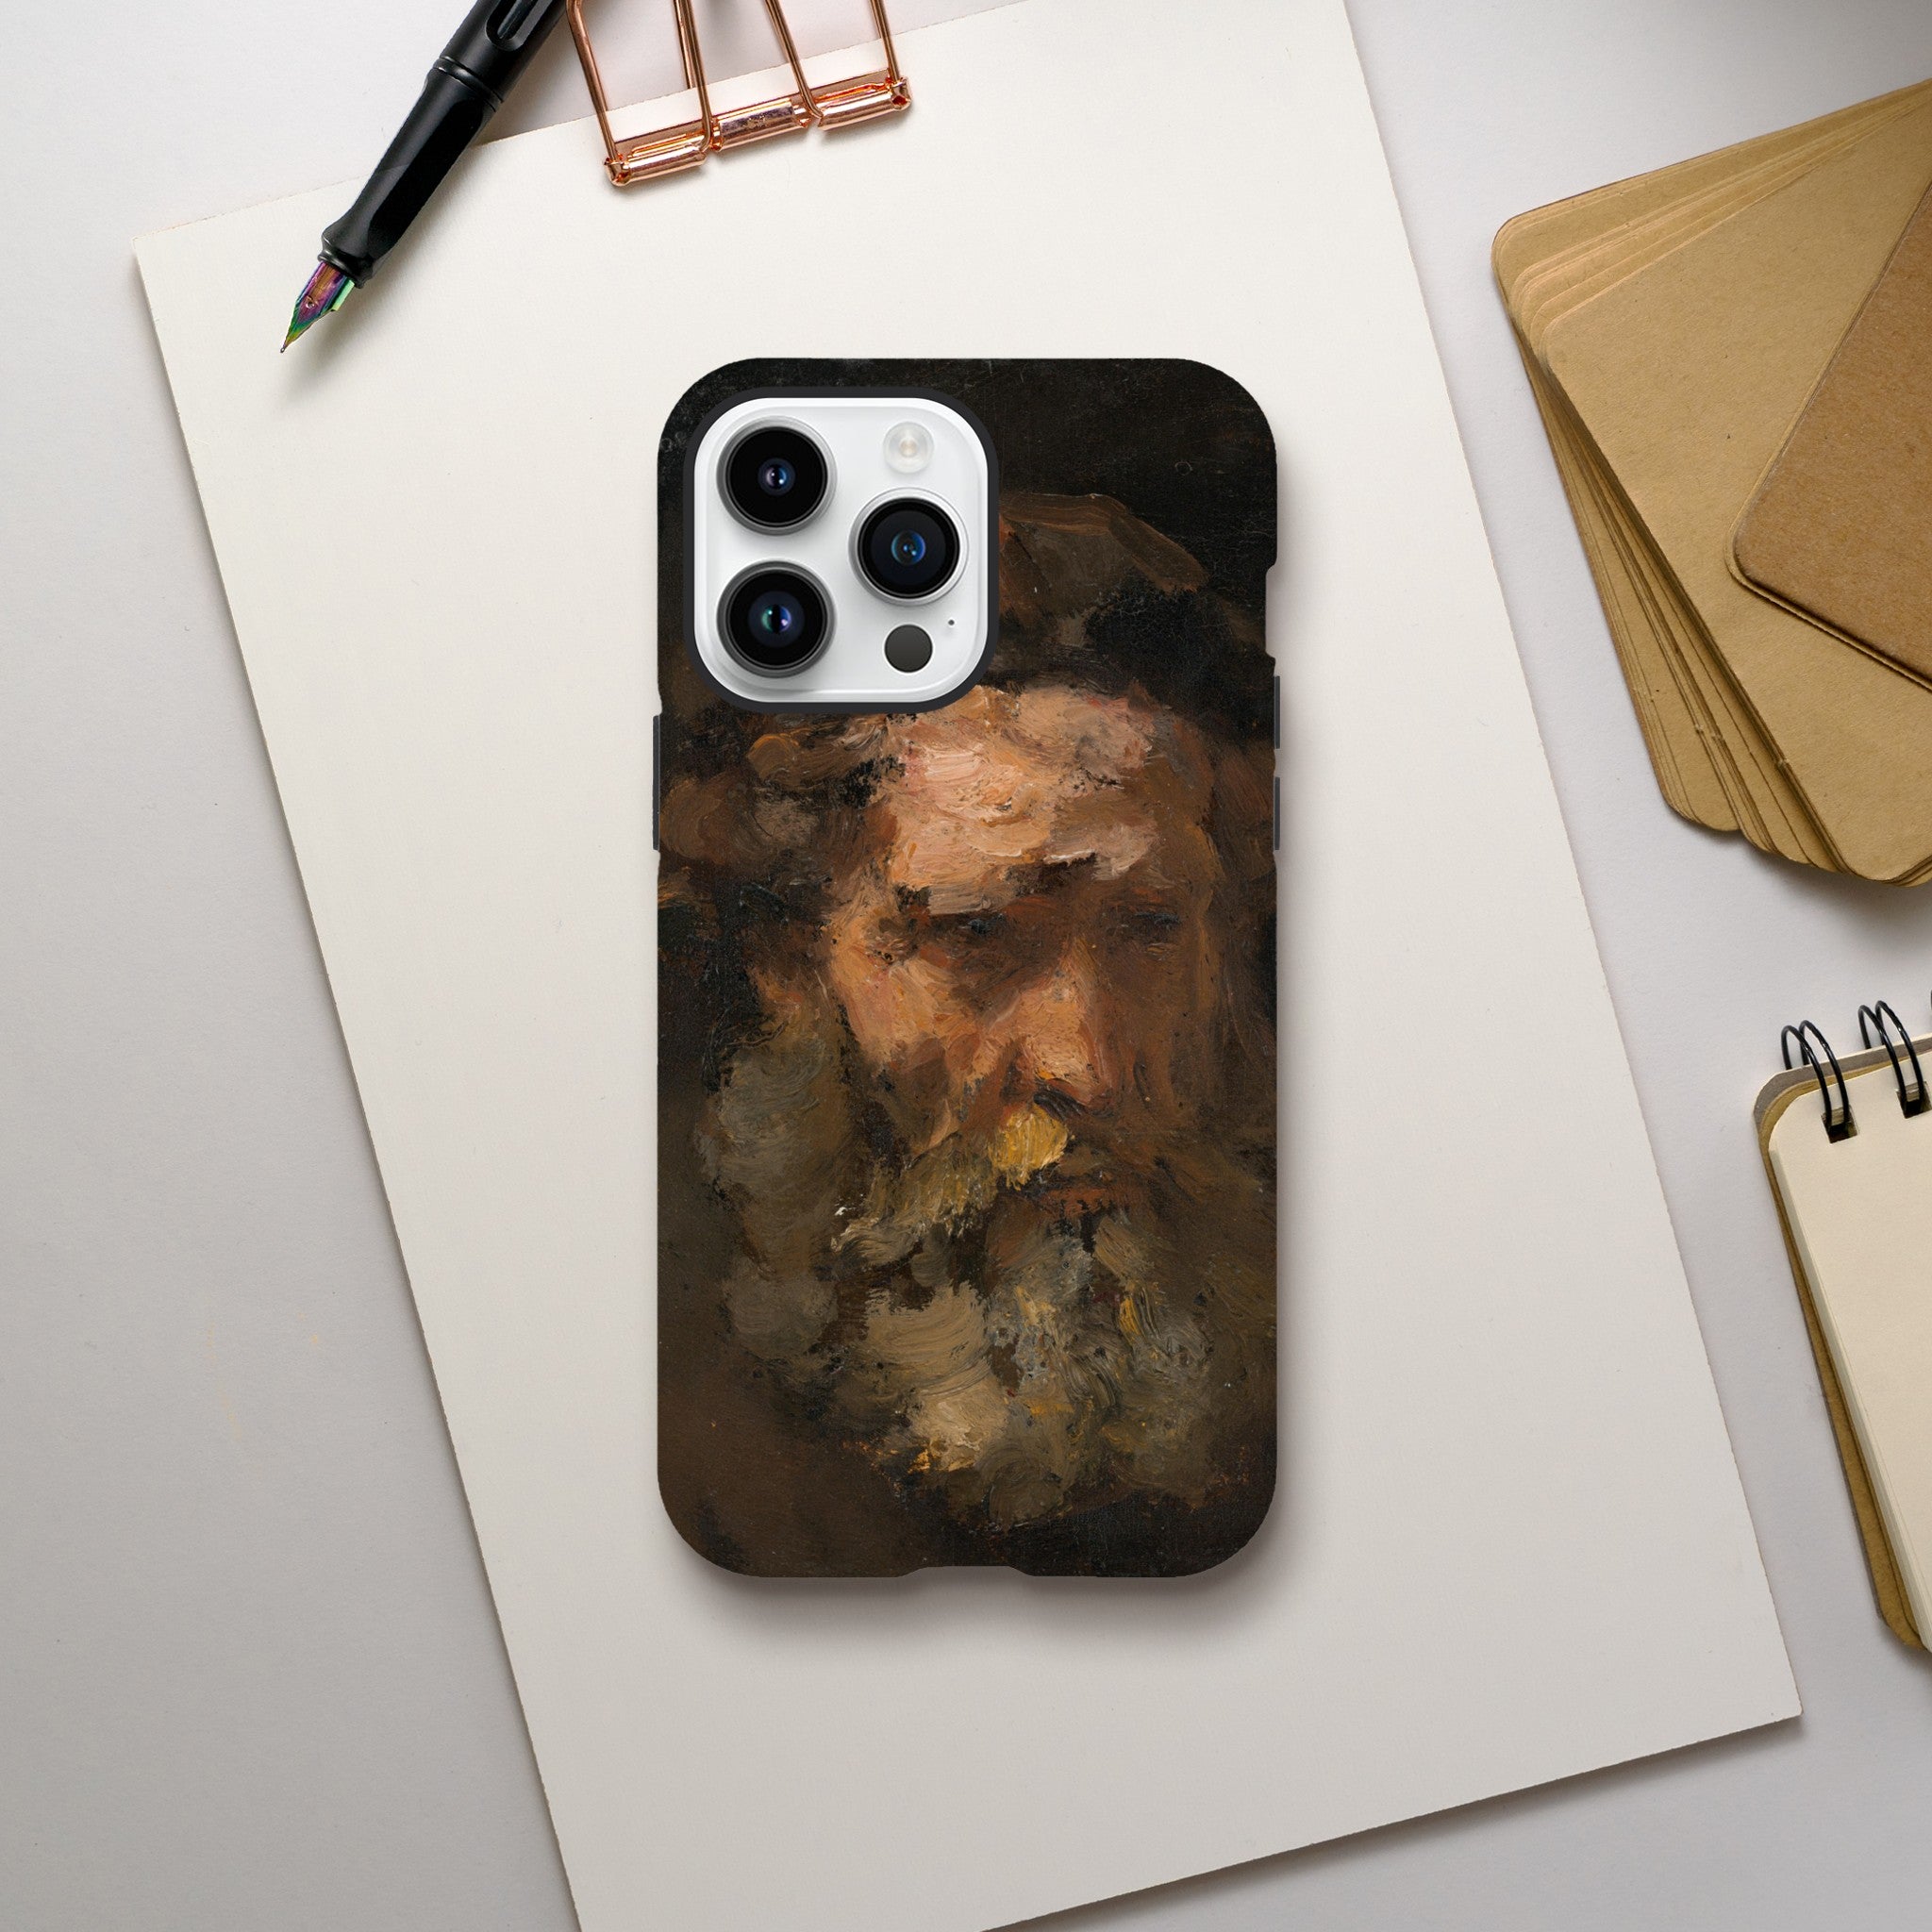 Painted Man I-phone Case - Tough case